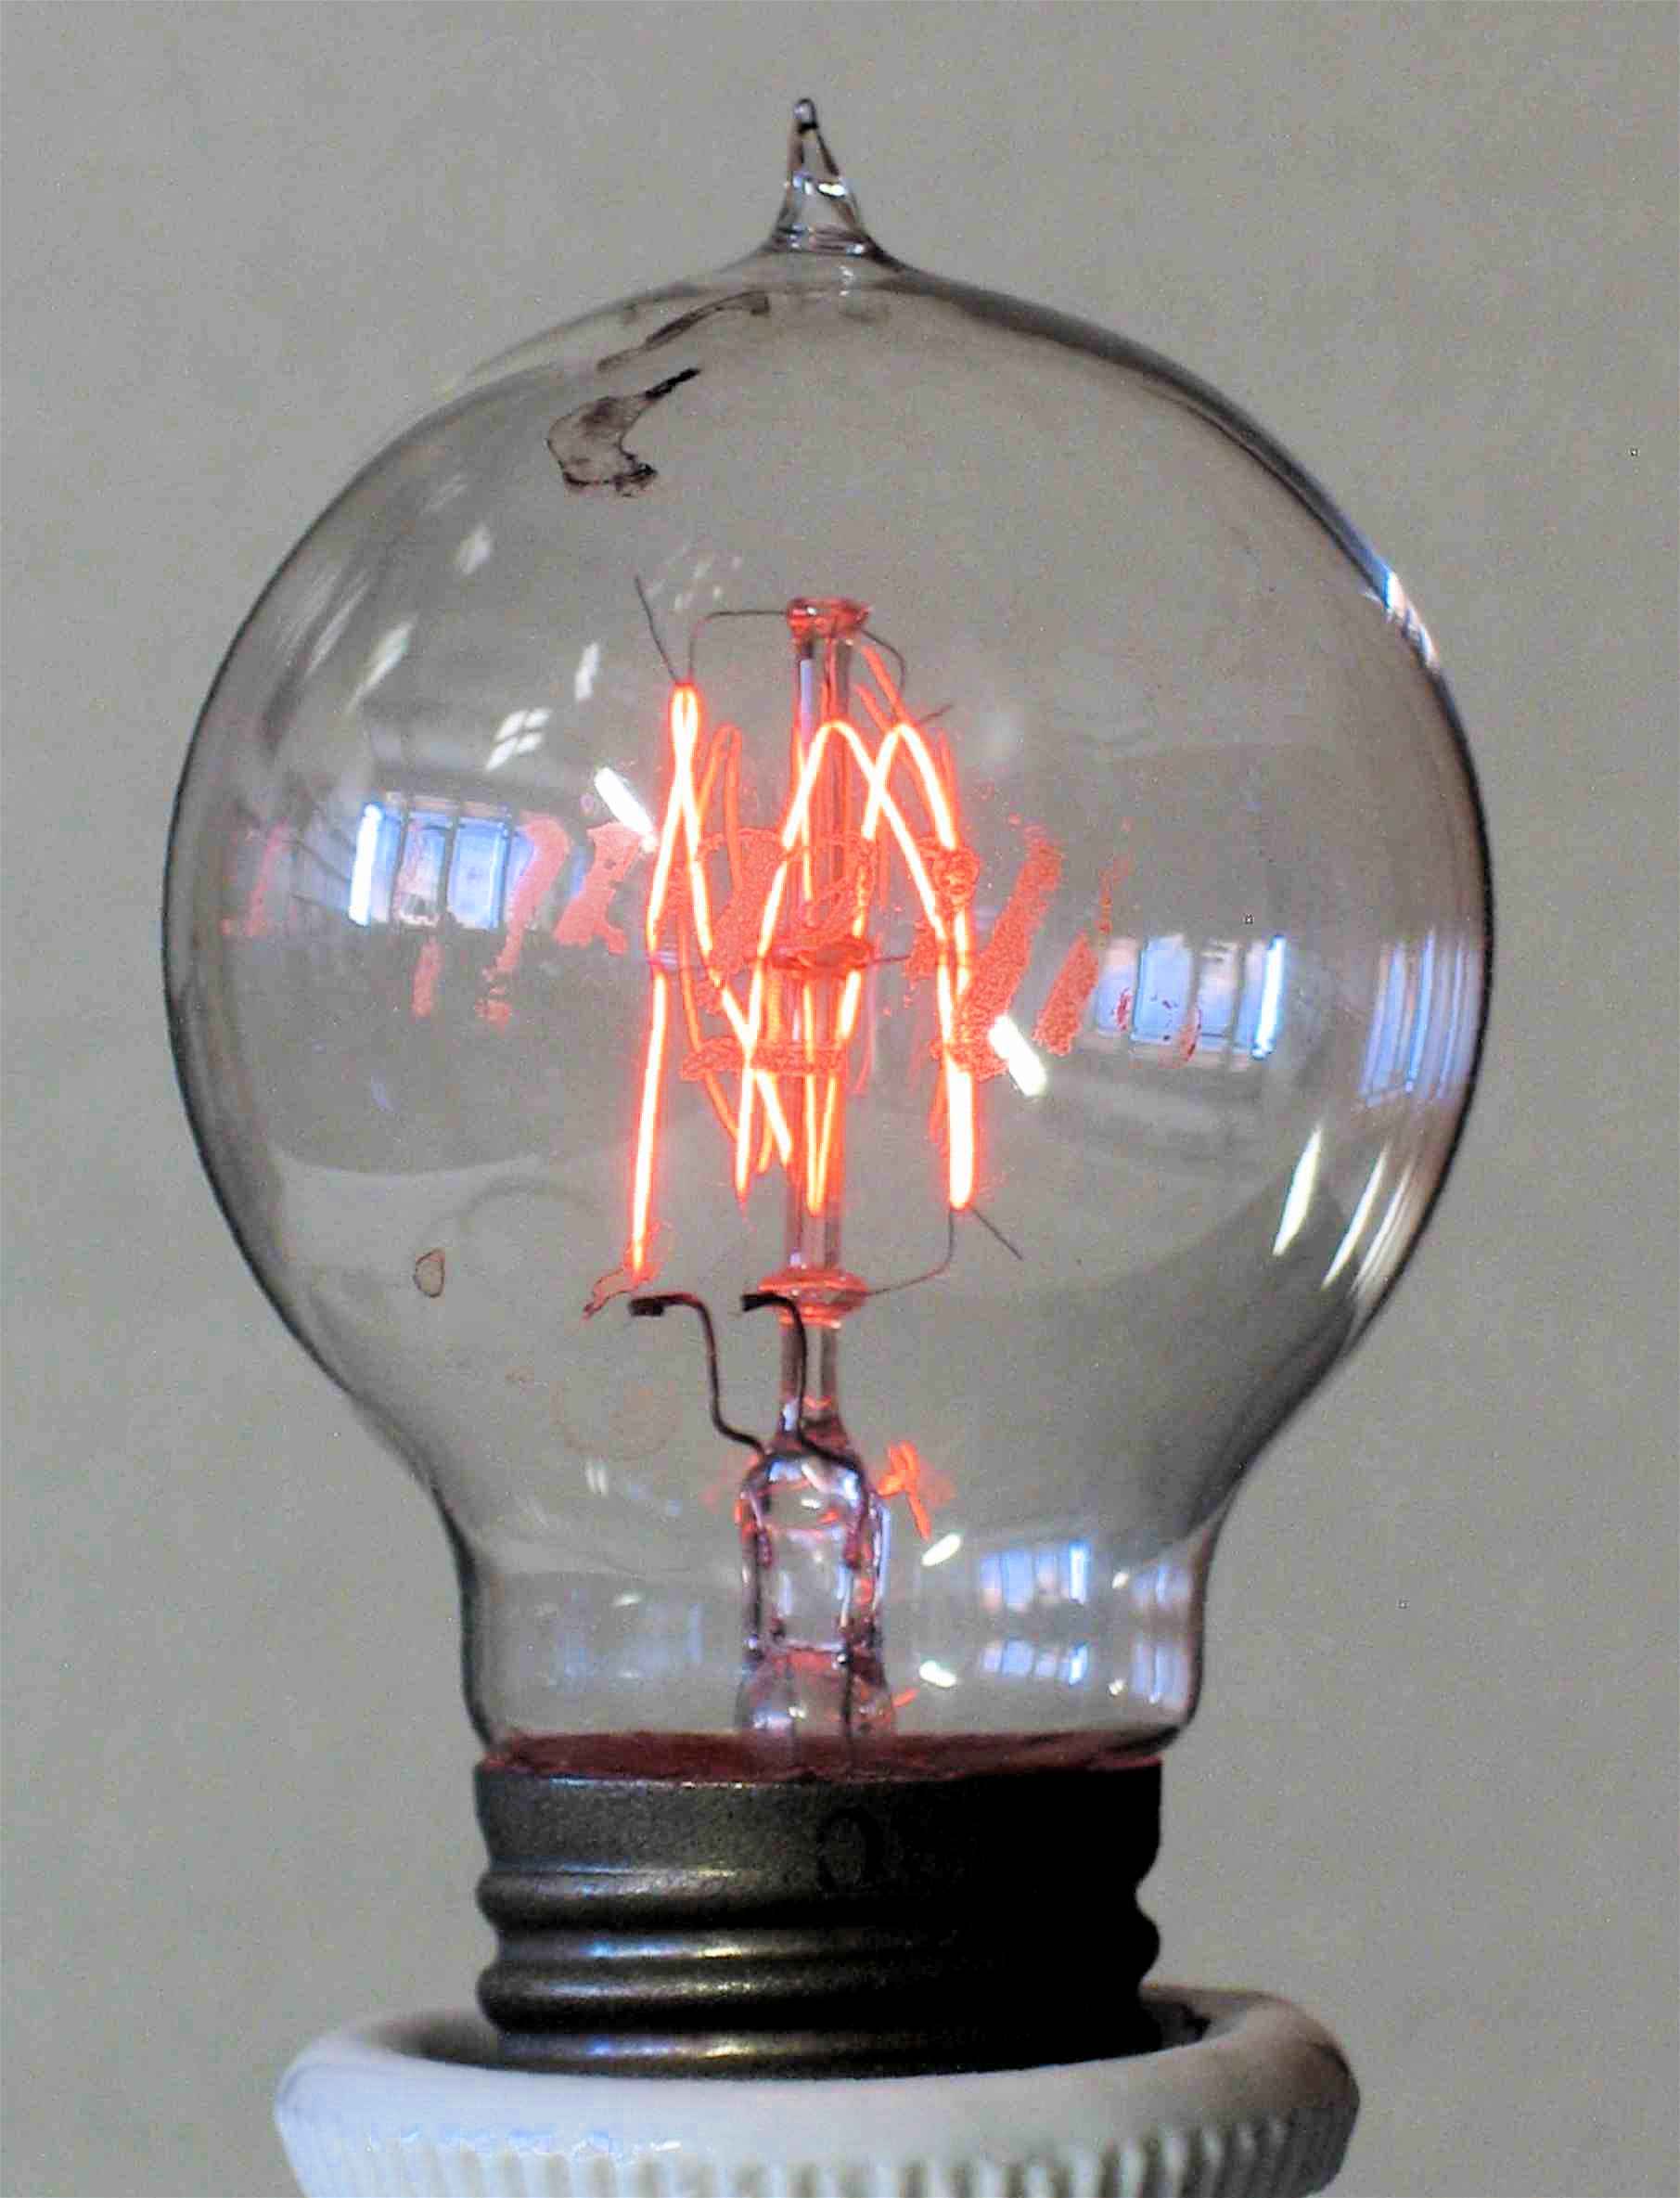 Petite lampe à incandescence
(filament métallique)